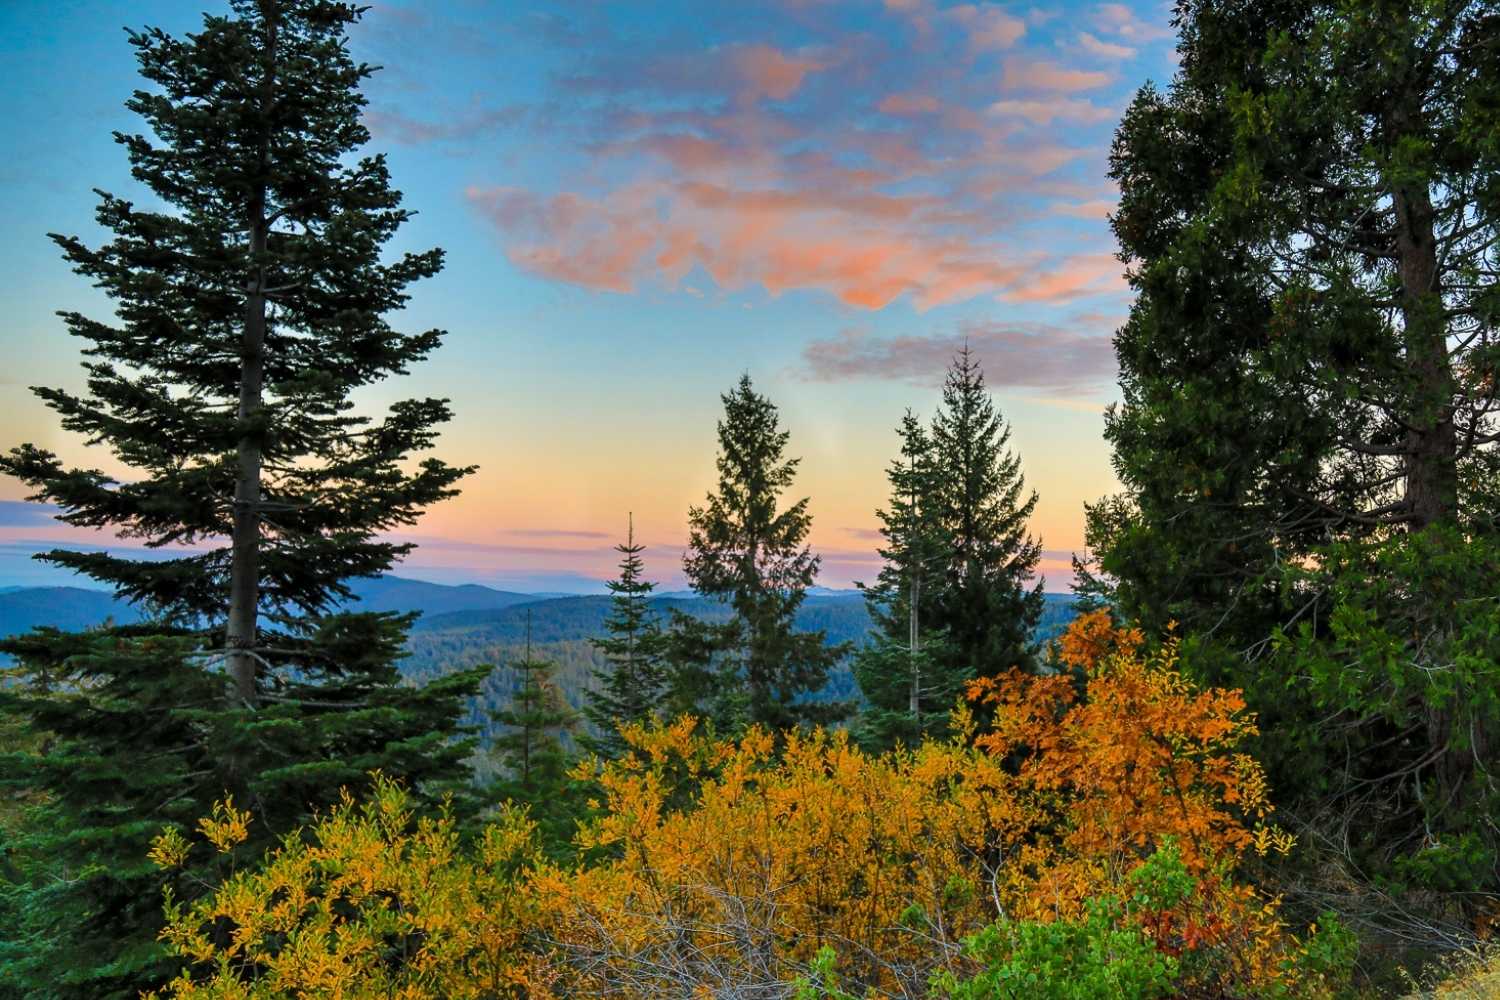 Northern California Fall Colors at Bucks Summit with beautiful views